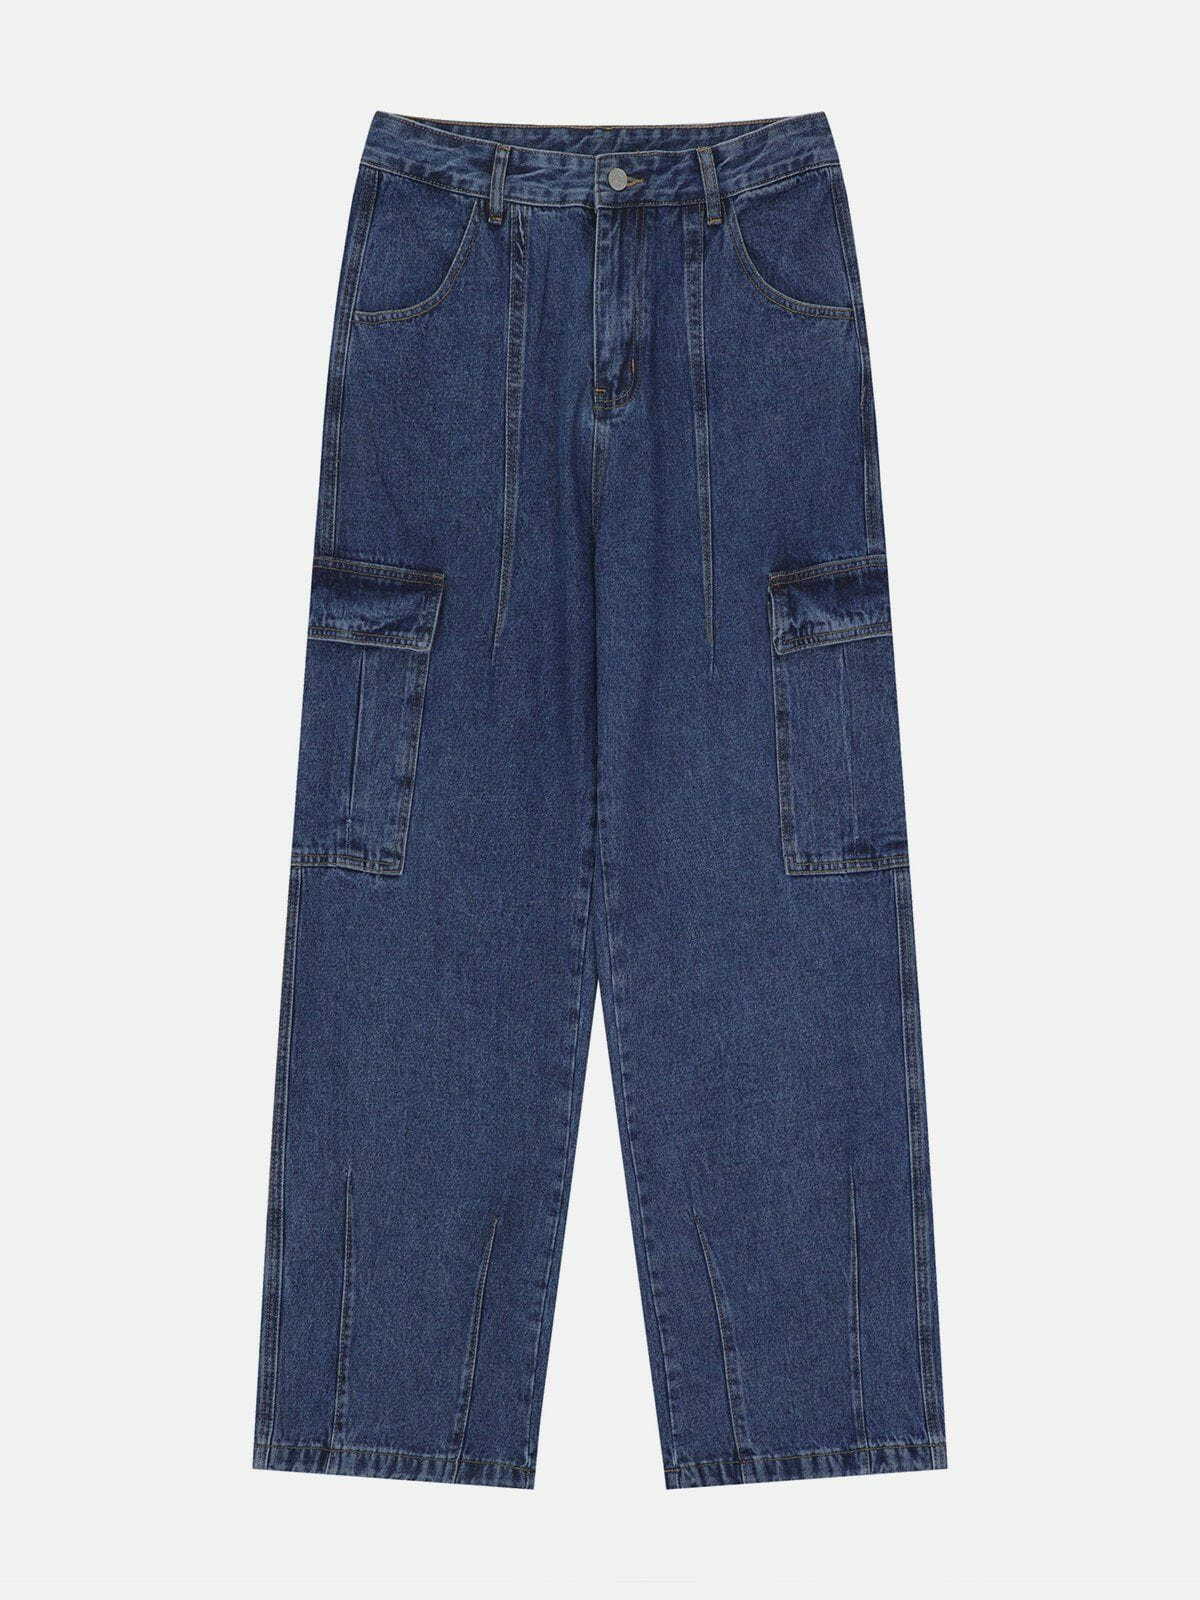 vintage patched pocket jeans edgy y2k streetwear 7531